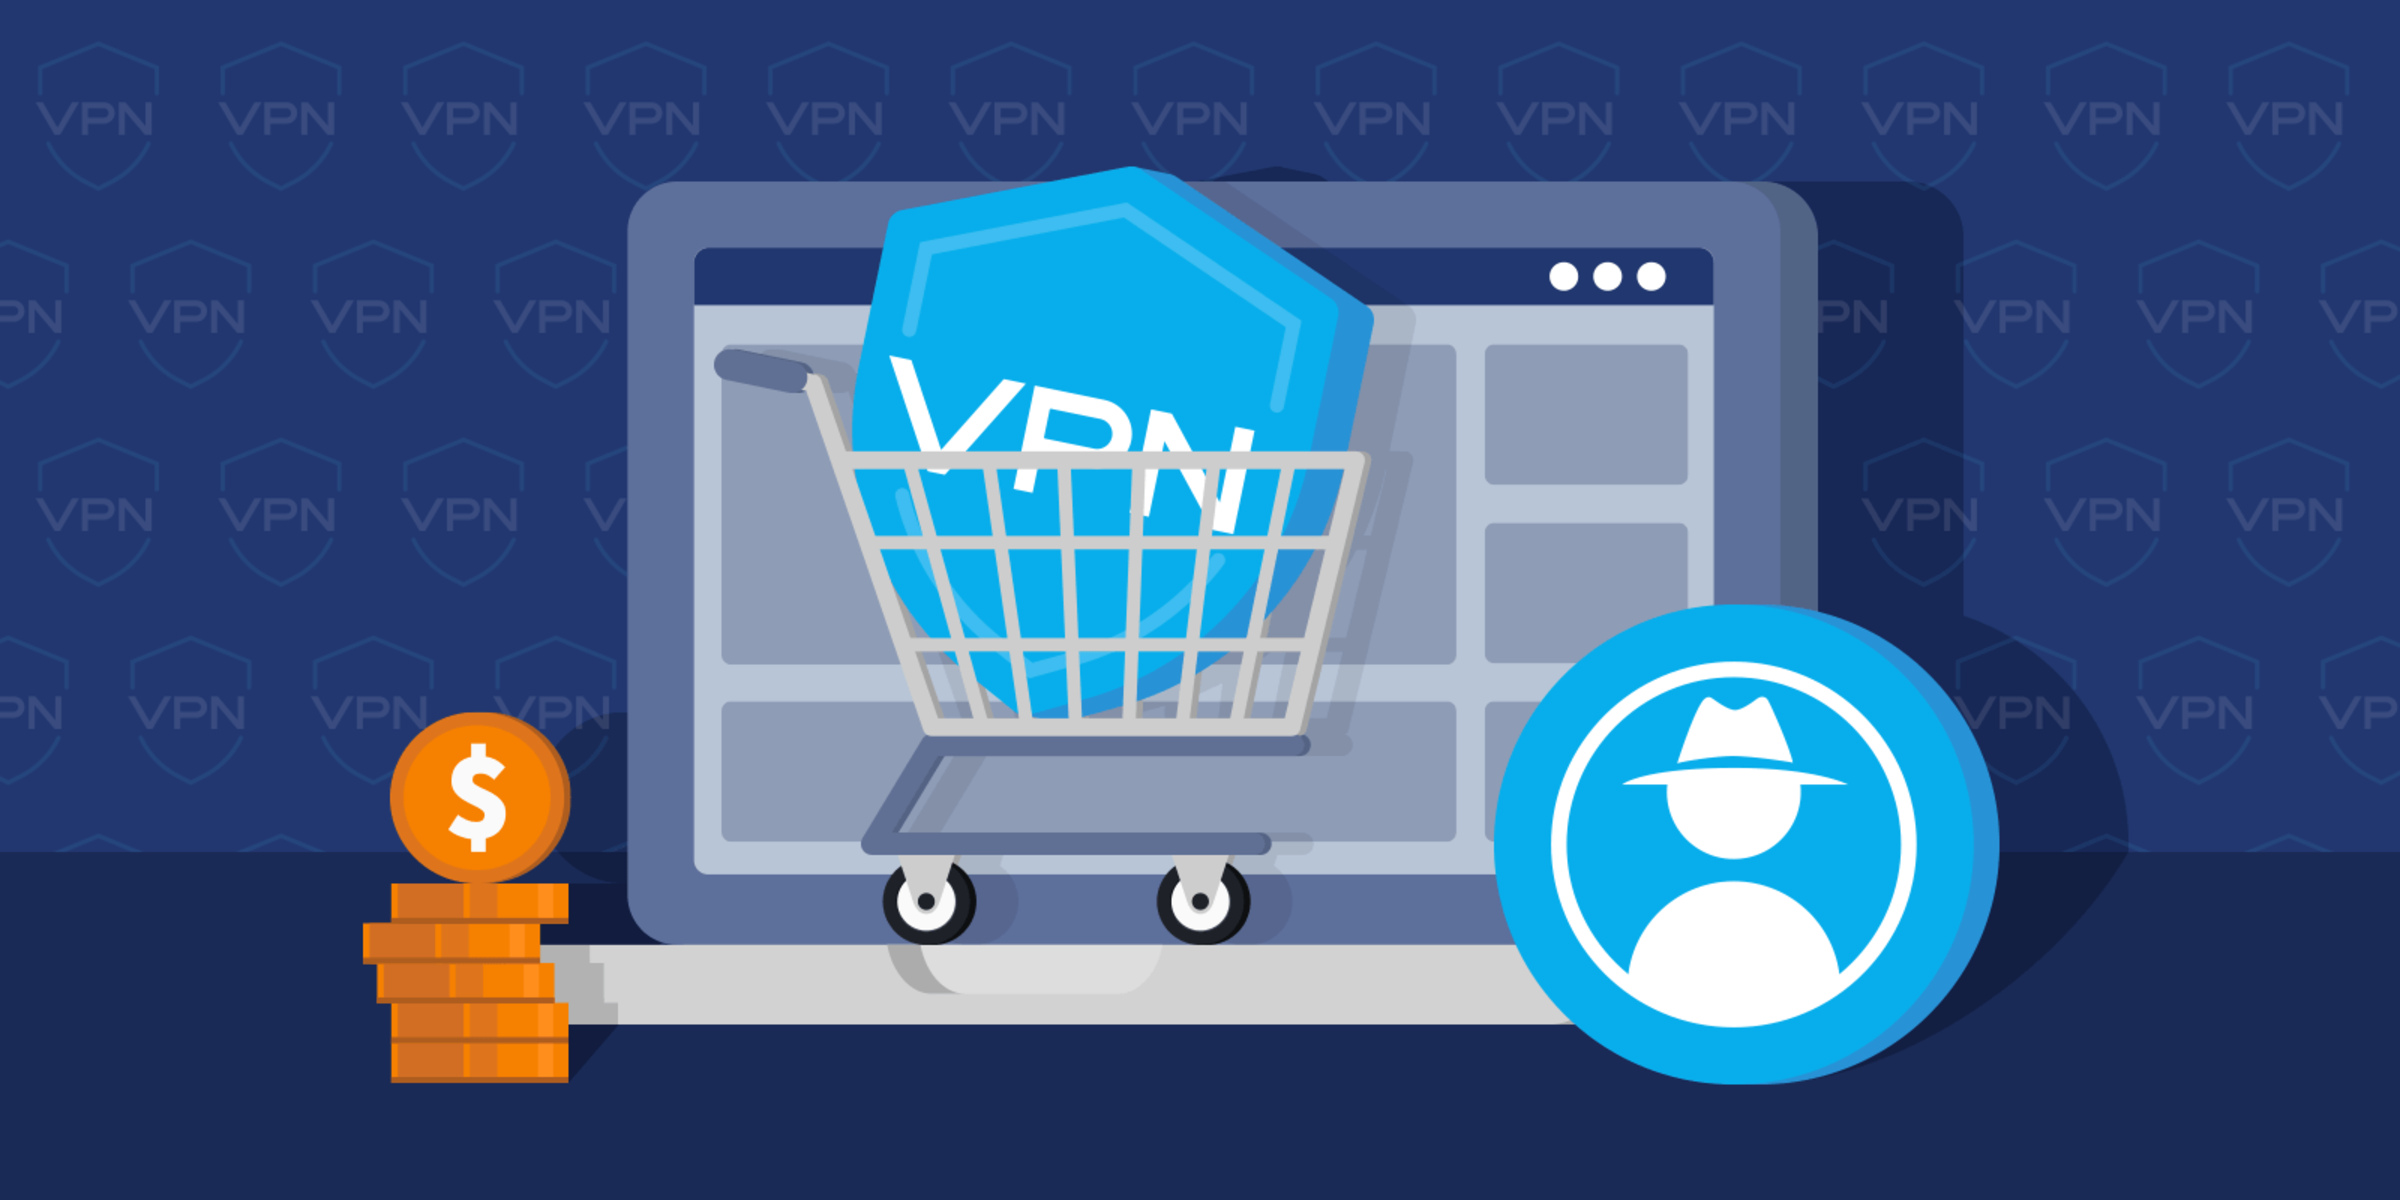 How To Buy A VPN